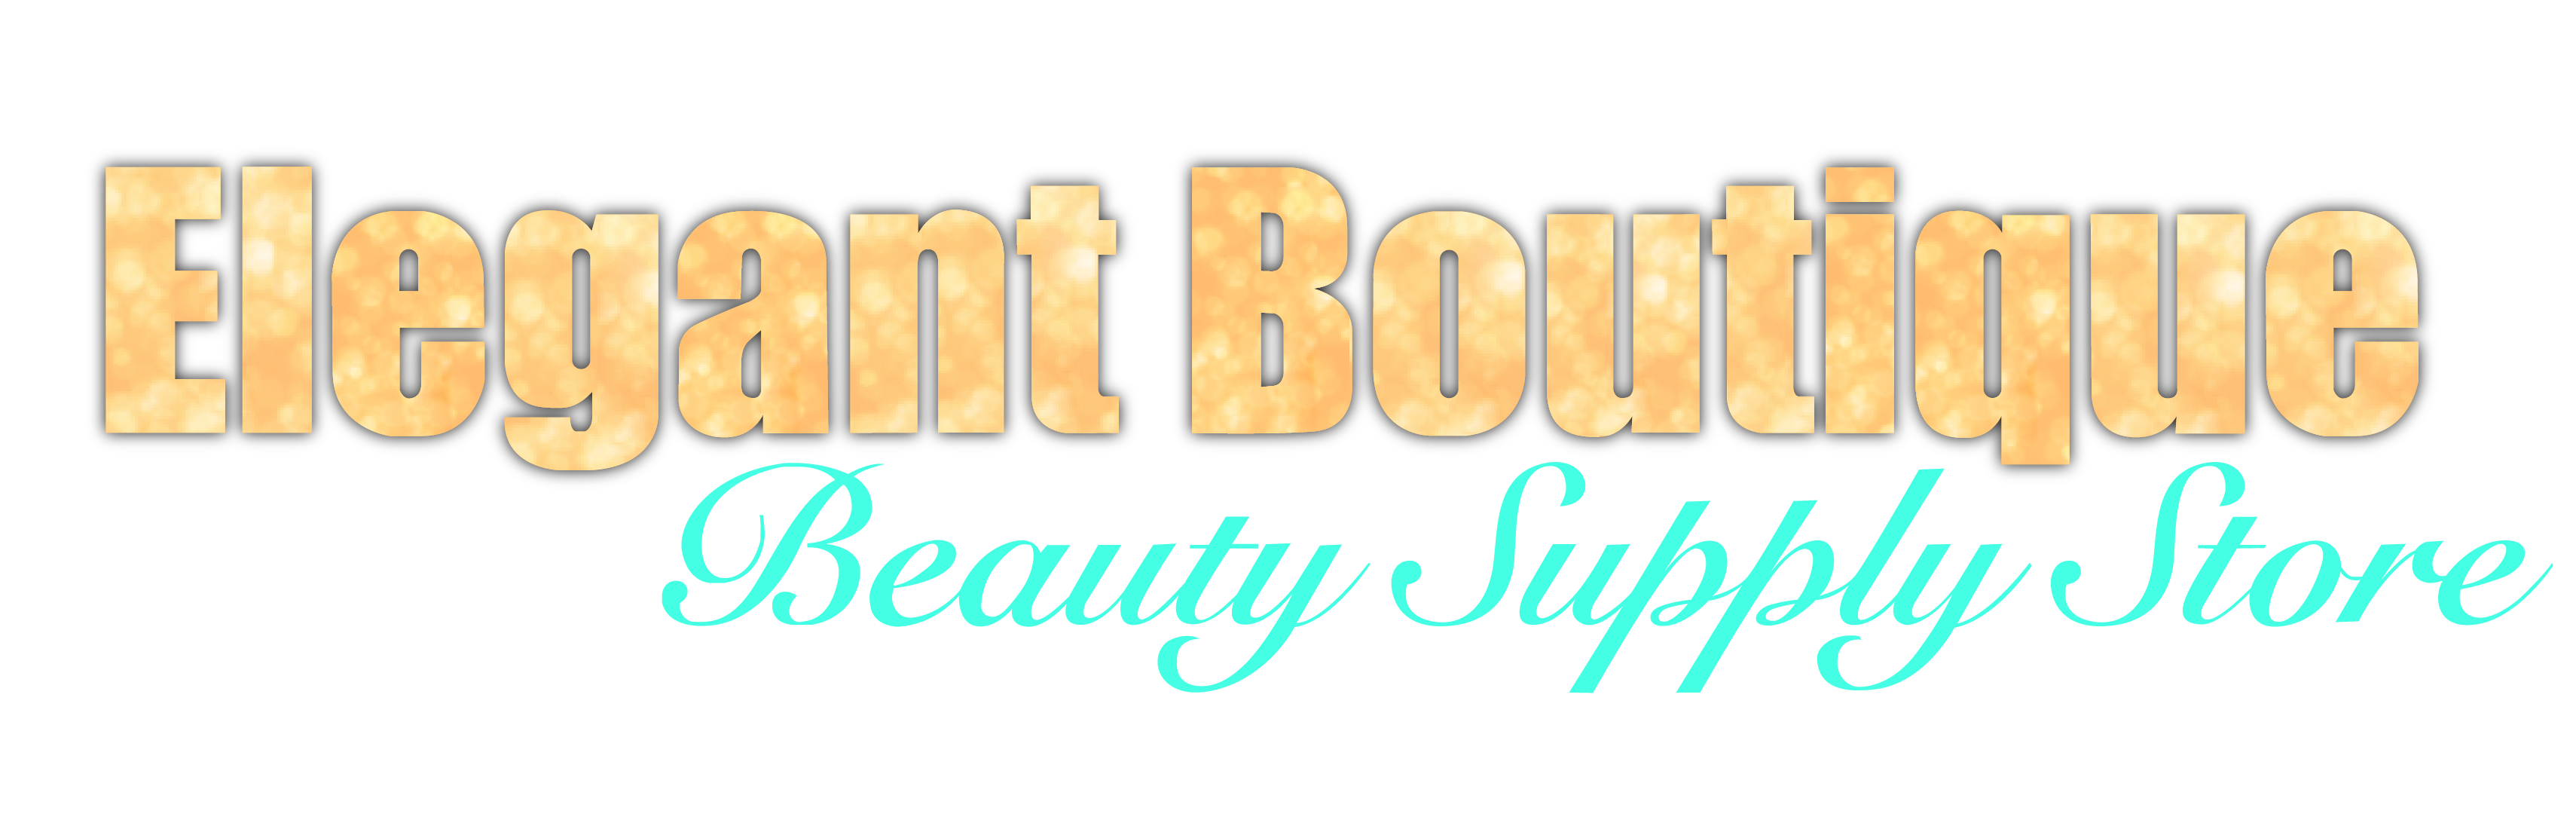 Elegant Boutique Beauty Supply